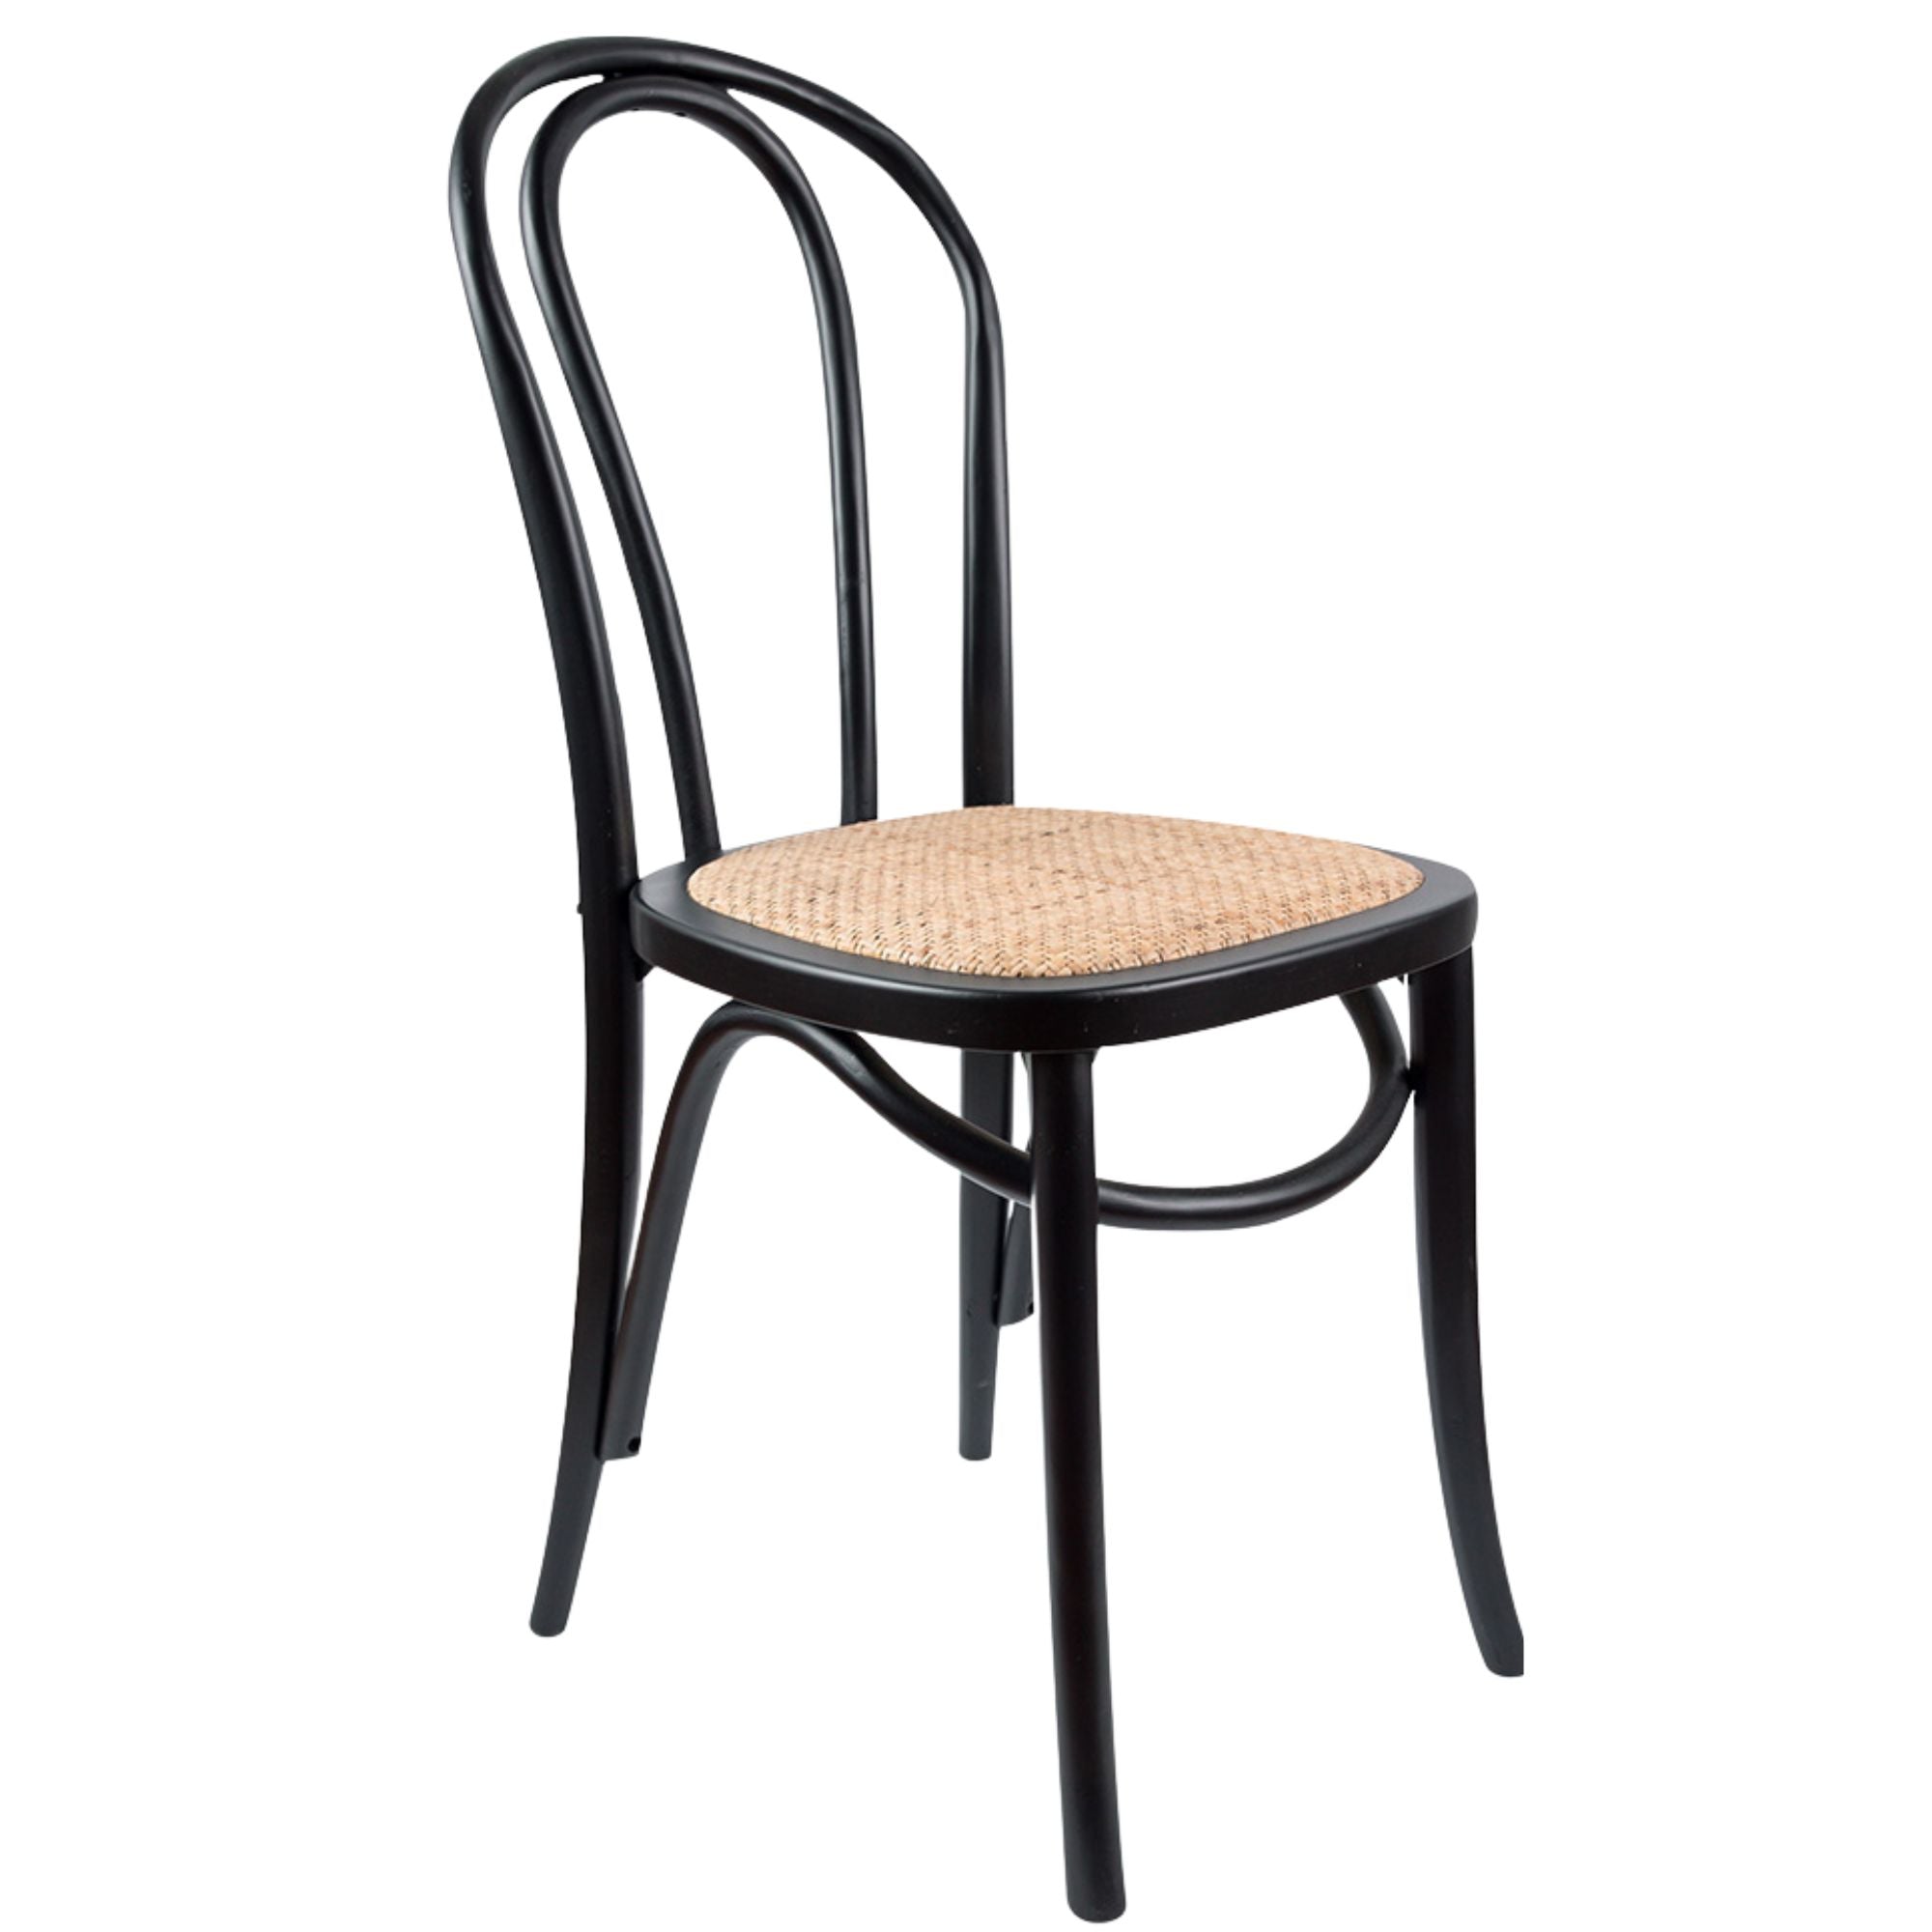 Lantana 7pc 210cm Dining Table 6 Black Arched Back Chair Set Live Edge Acacia - SILBERSHELL